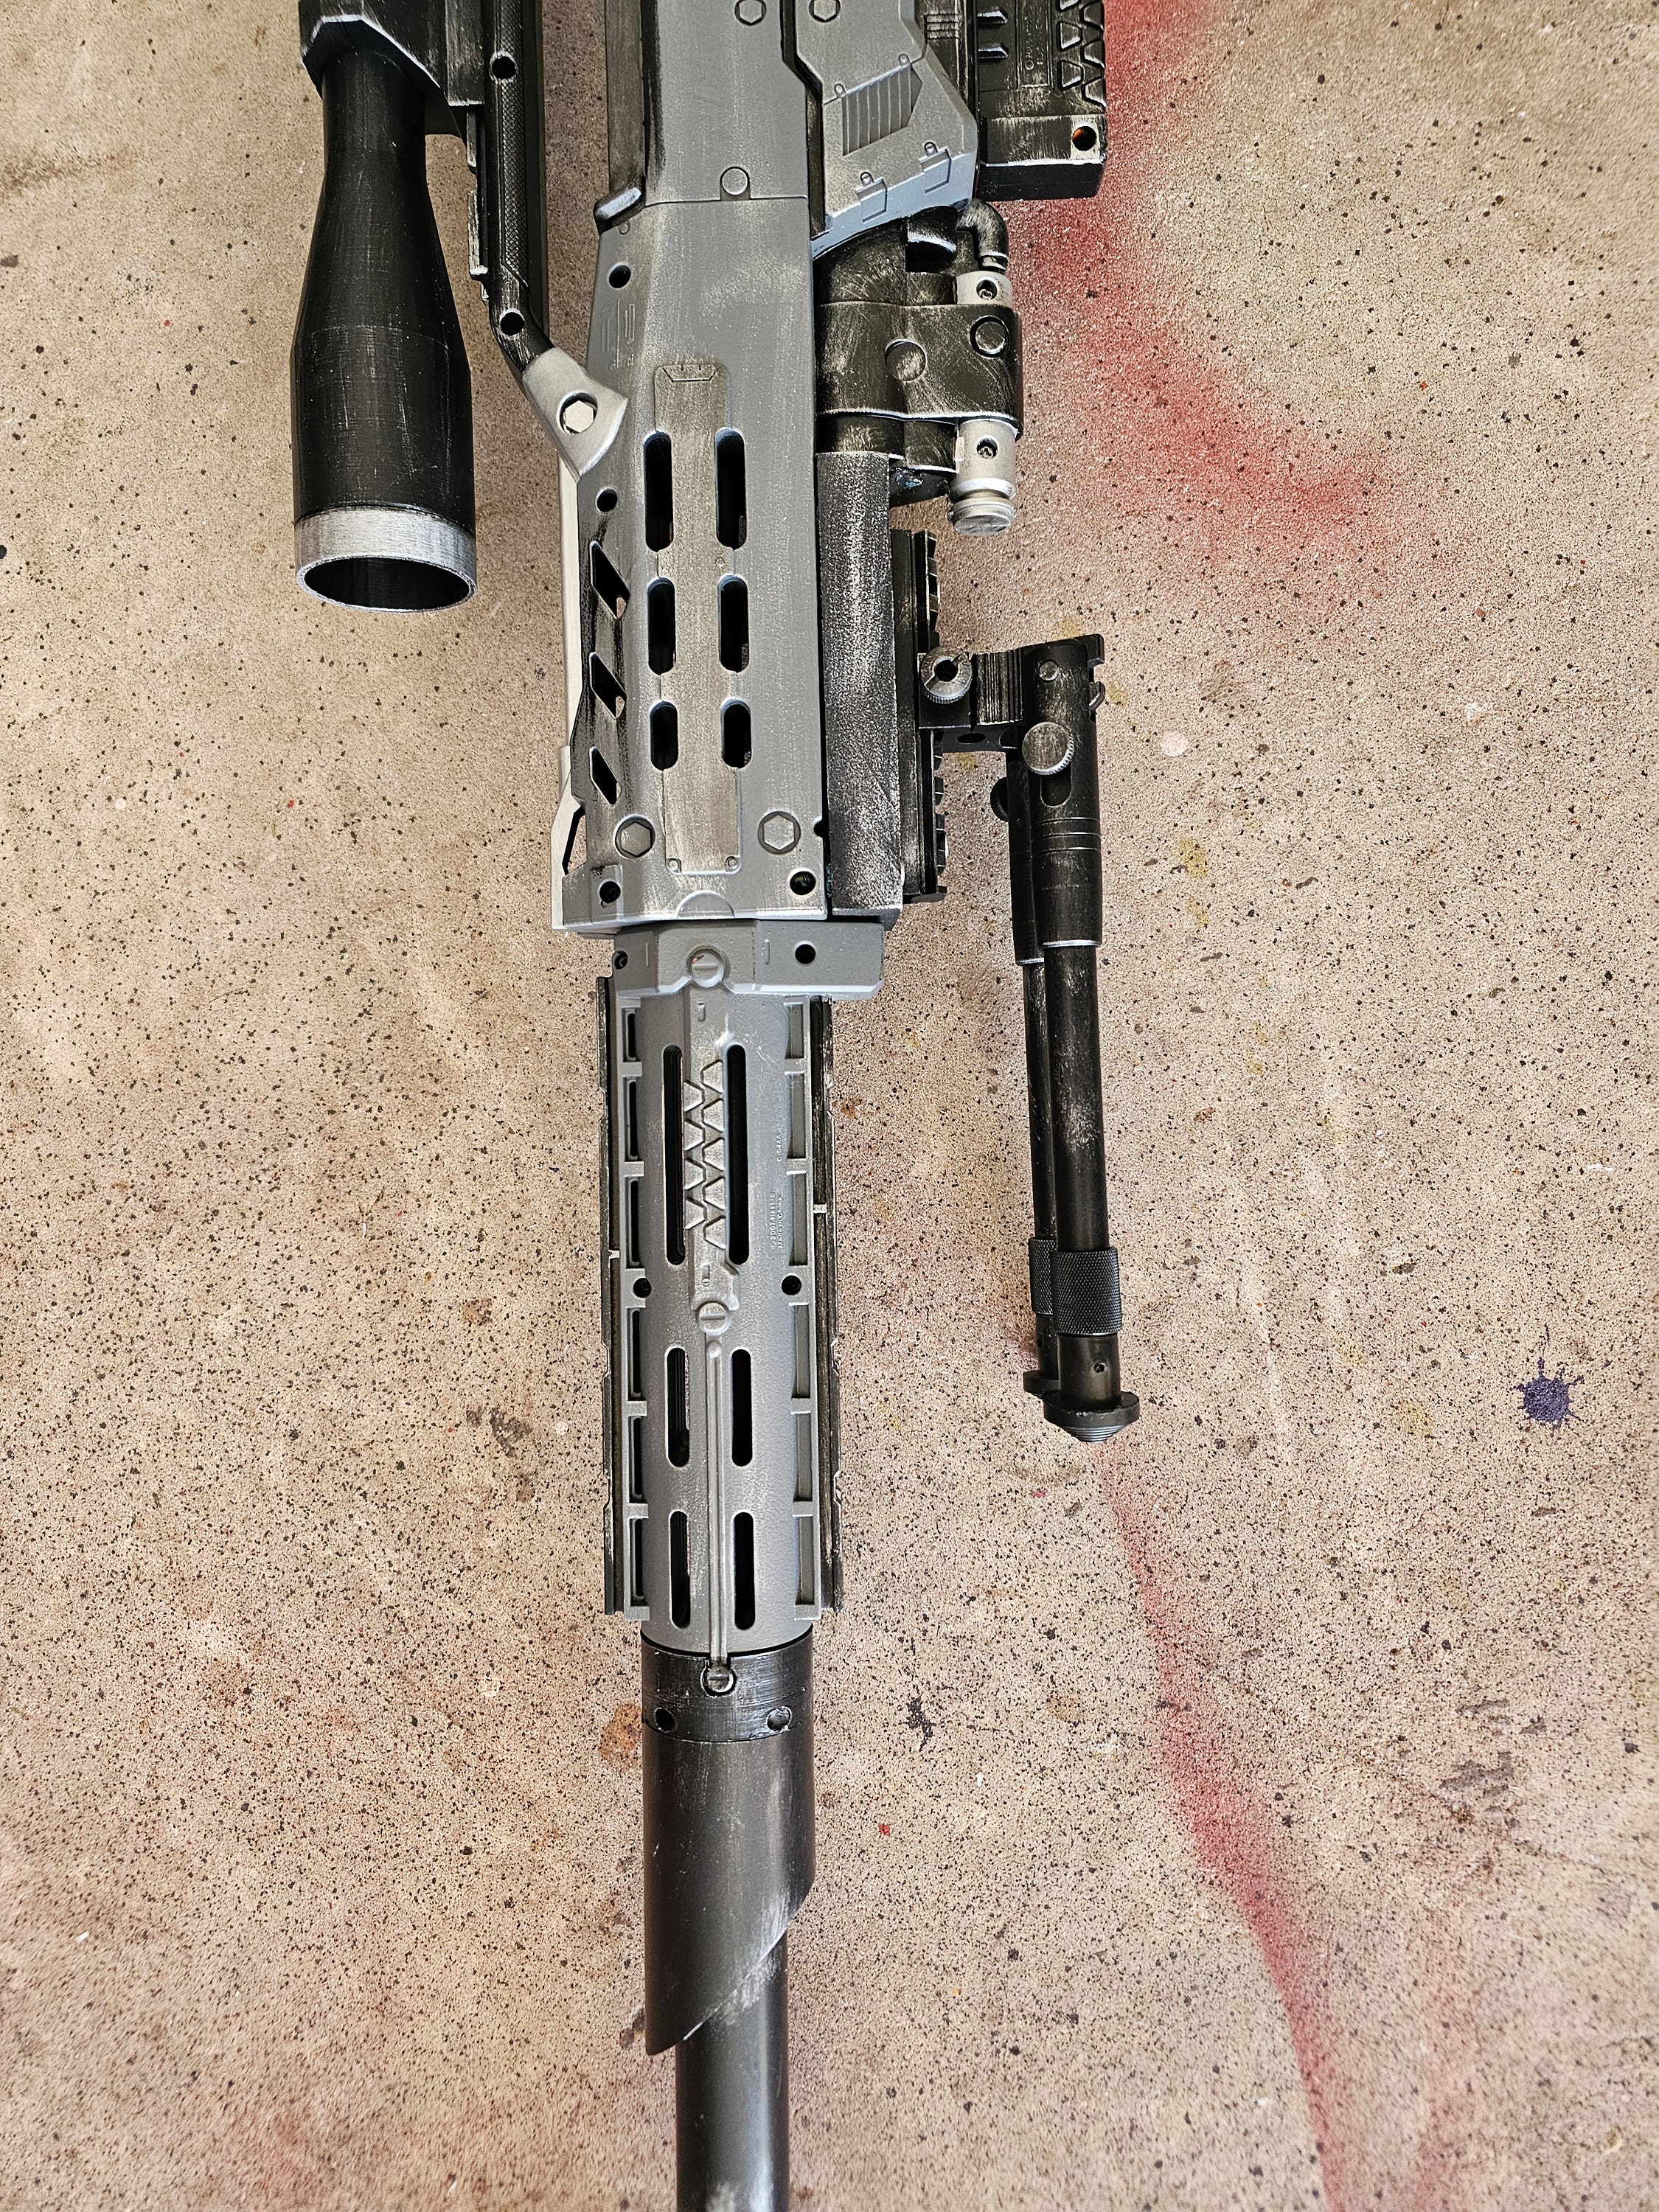 RARE Nerf Longshot CS-6 Sniper Rifle Z Dart Blaster Gun with adjustible  stock